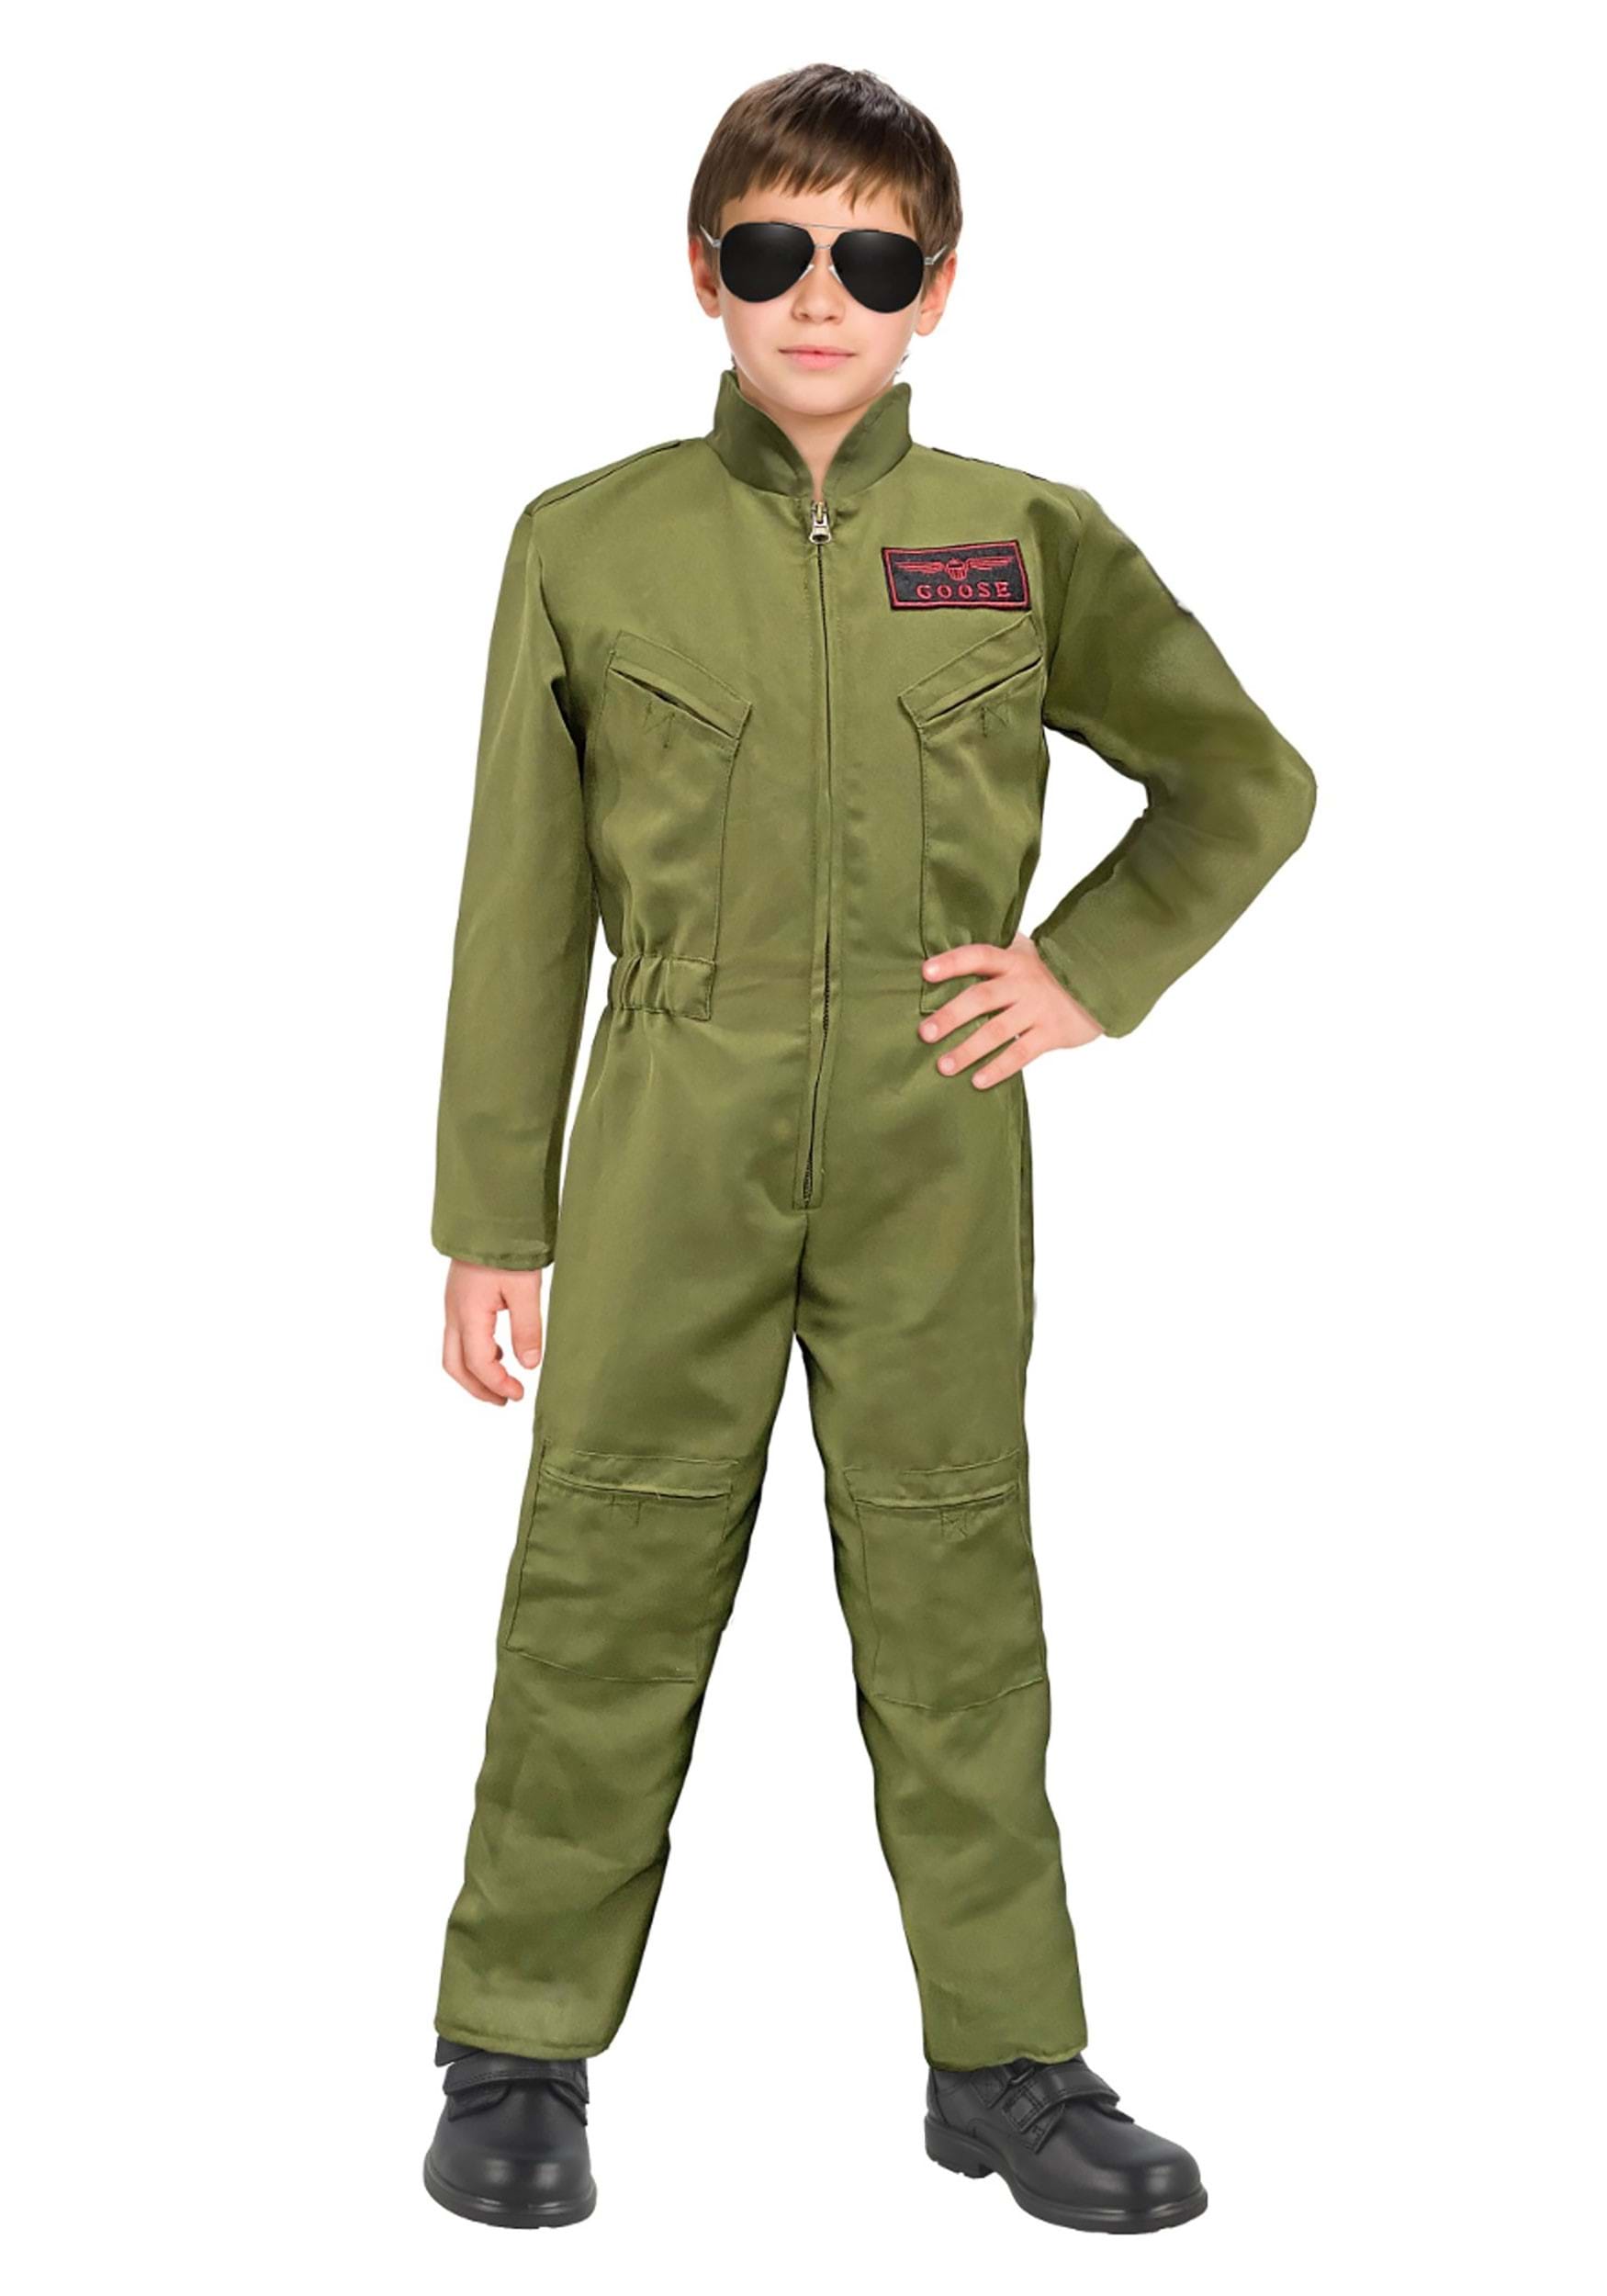 Kid's Green Fighter Pilot Jumpsuit Costume | Pilot Costumes